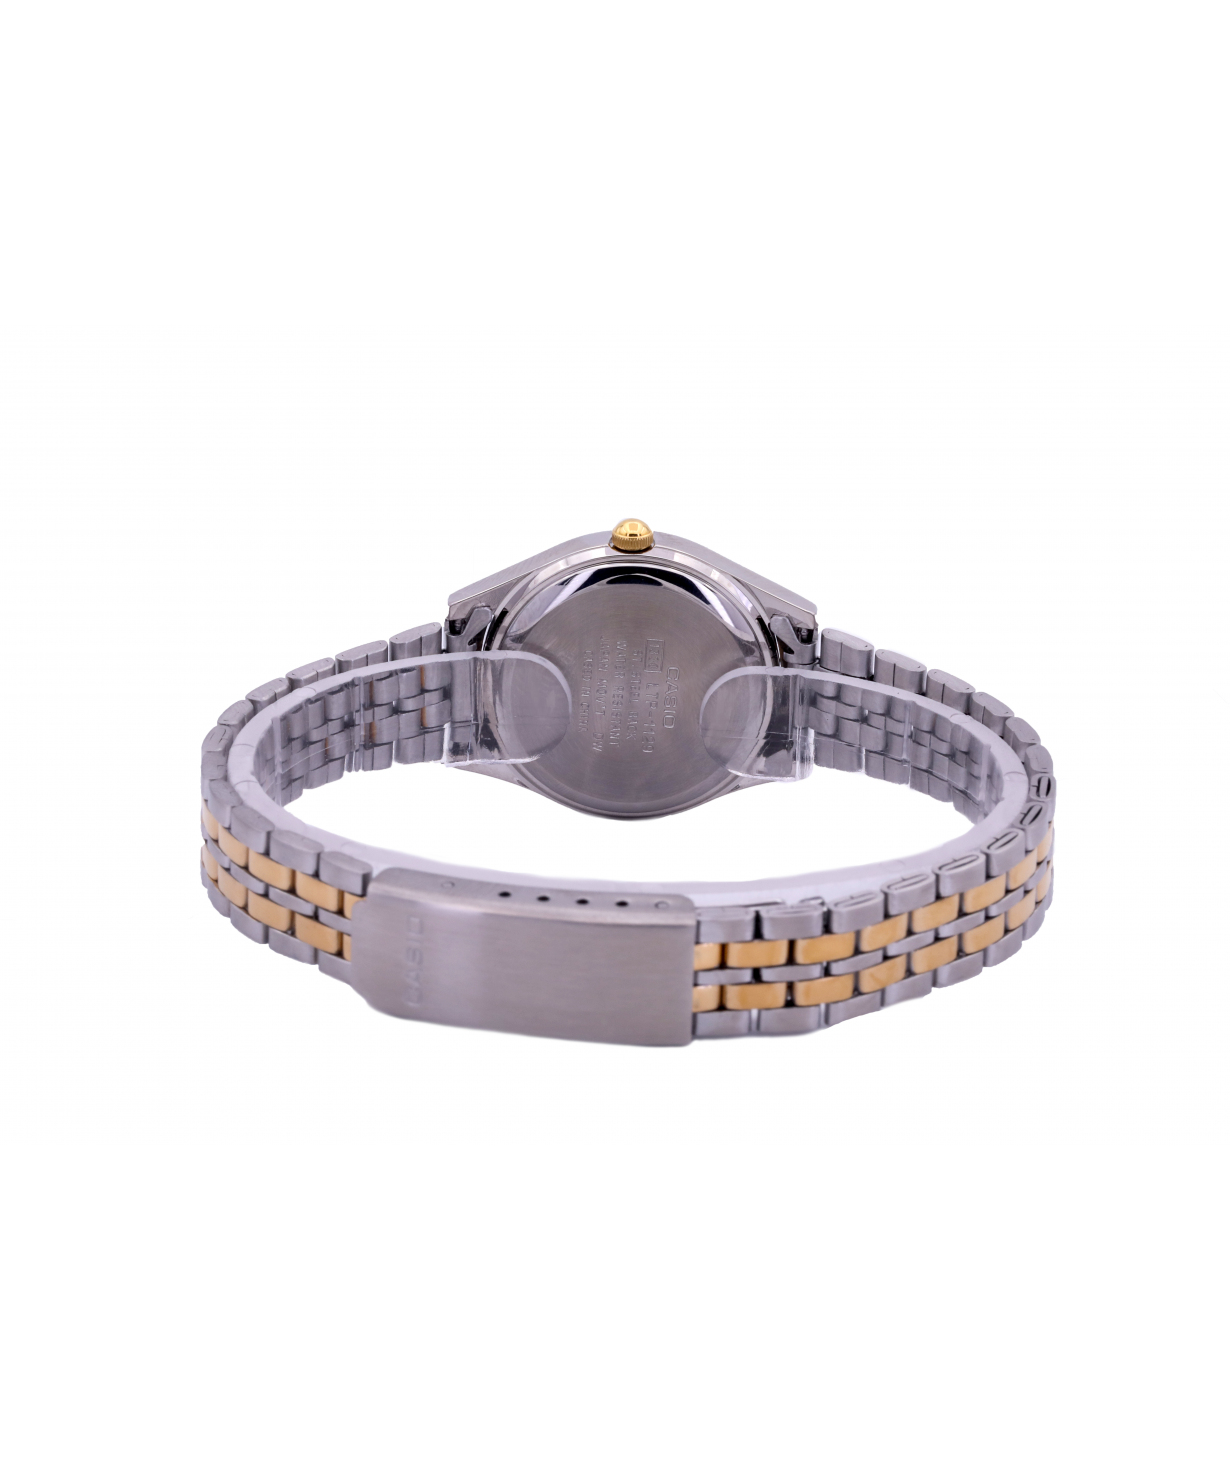 Wristwatch  `Casio` LTP-1129G-7BRDF